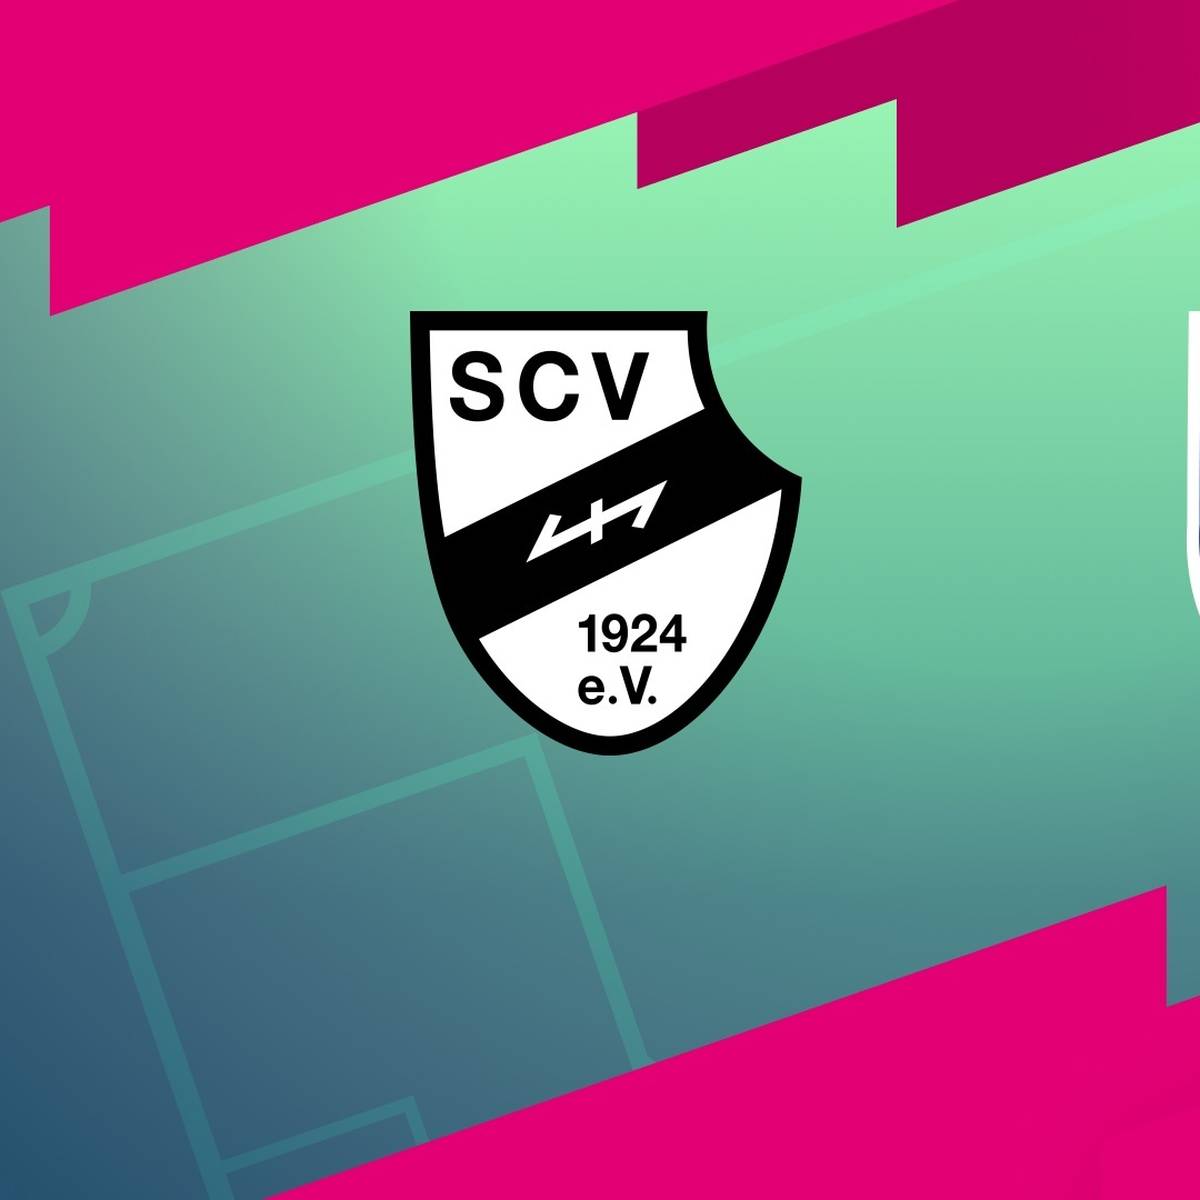 SC Verl - MSV Duisburg (Highlights)